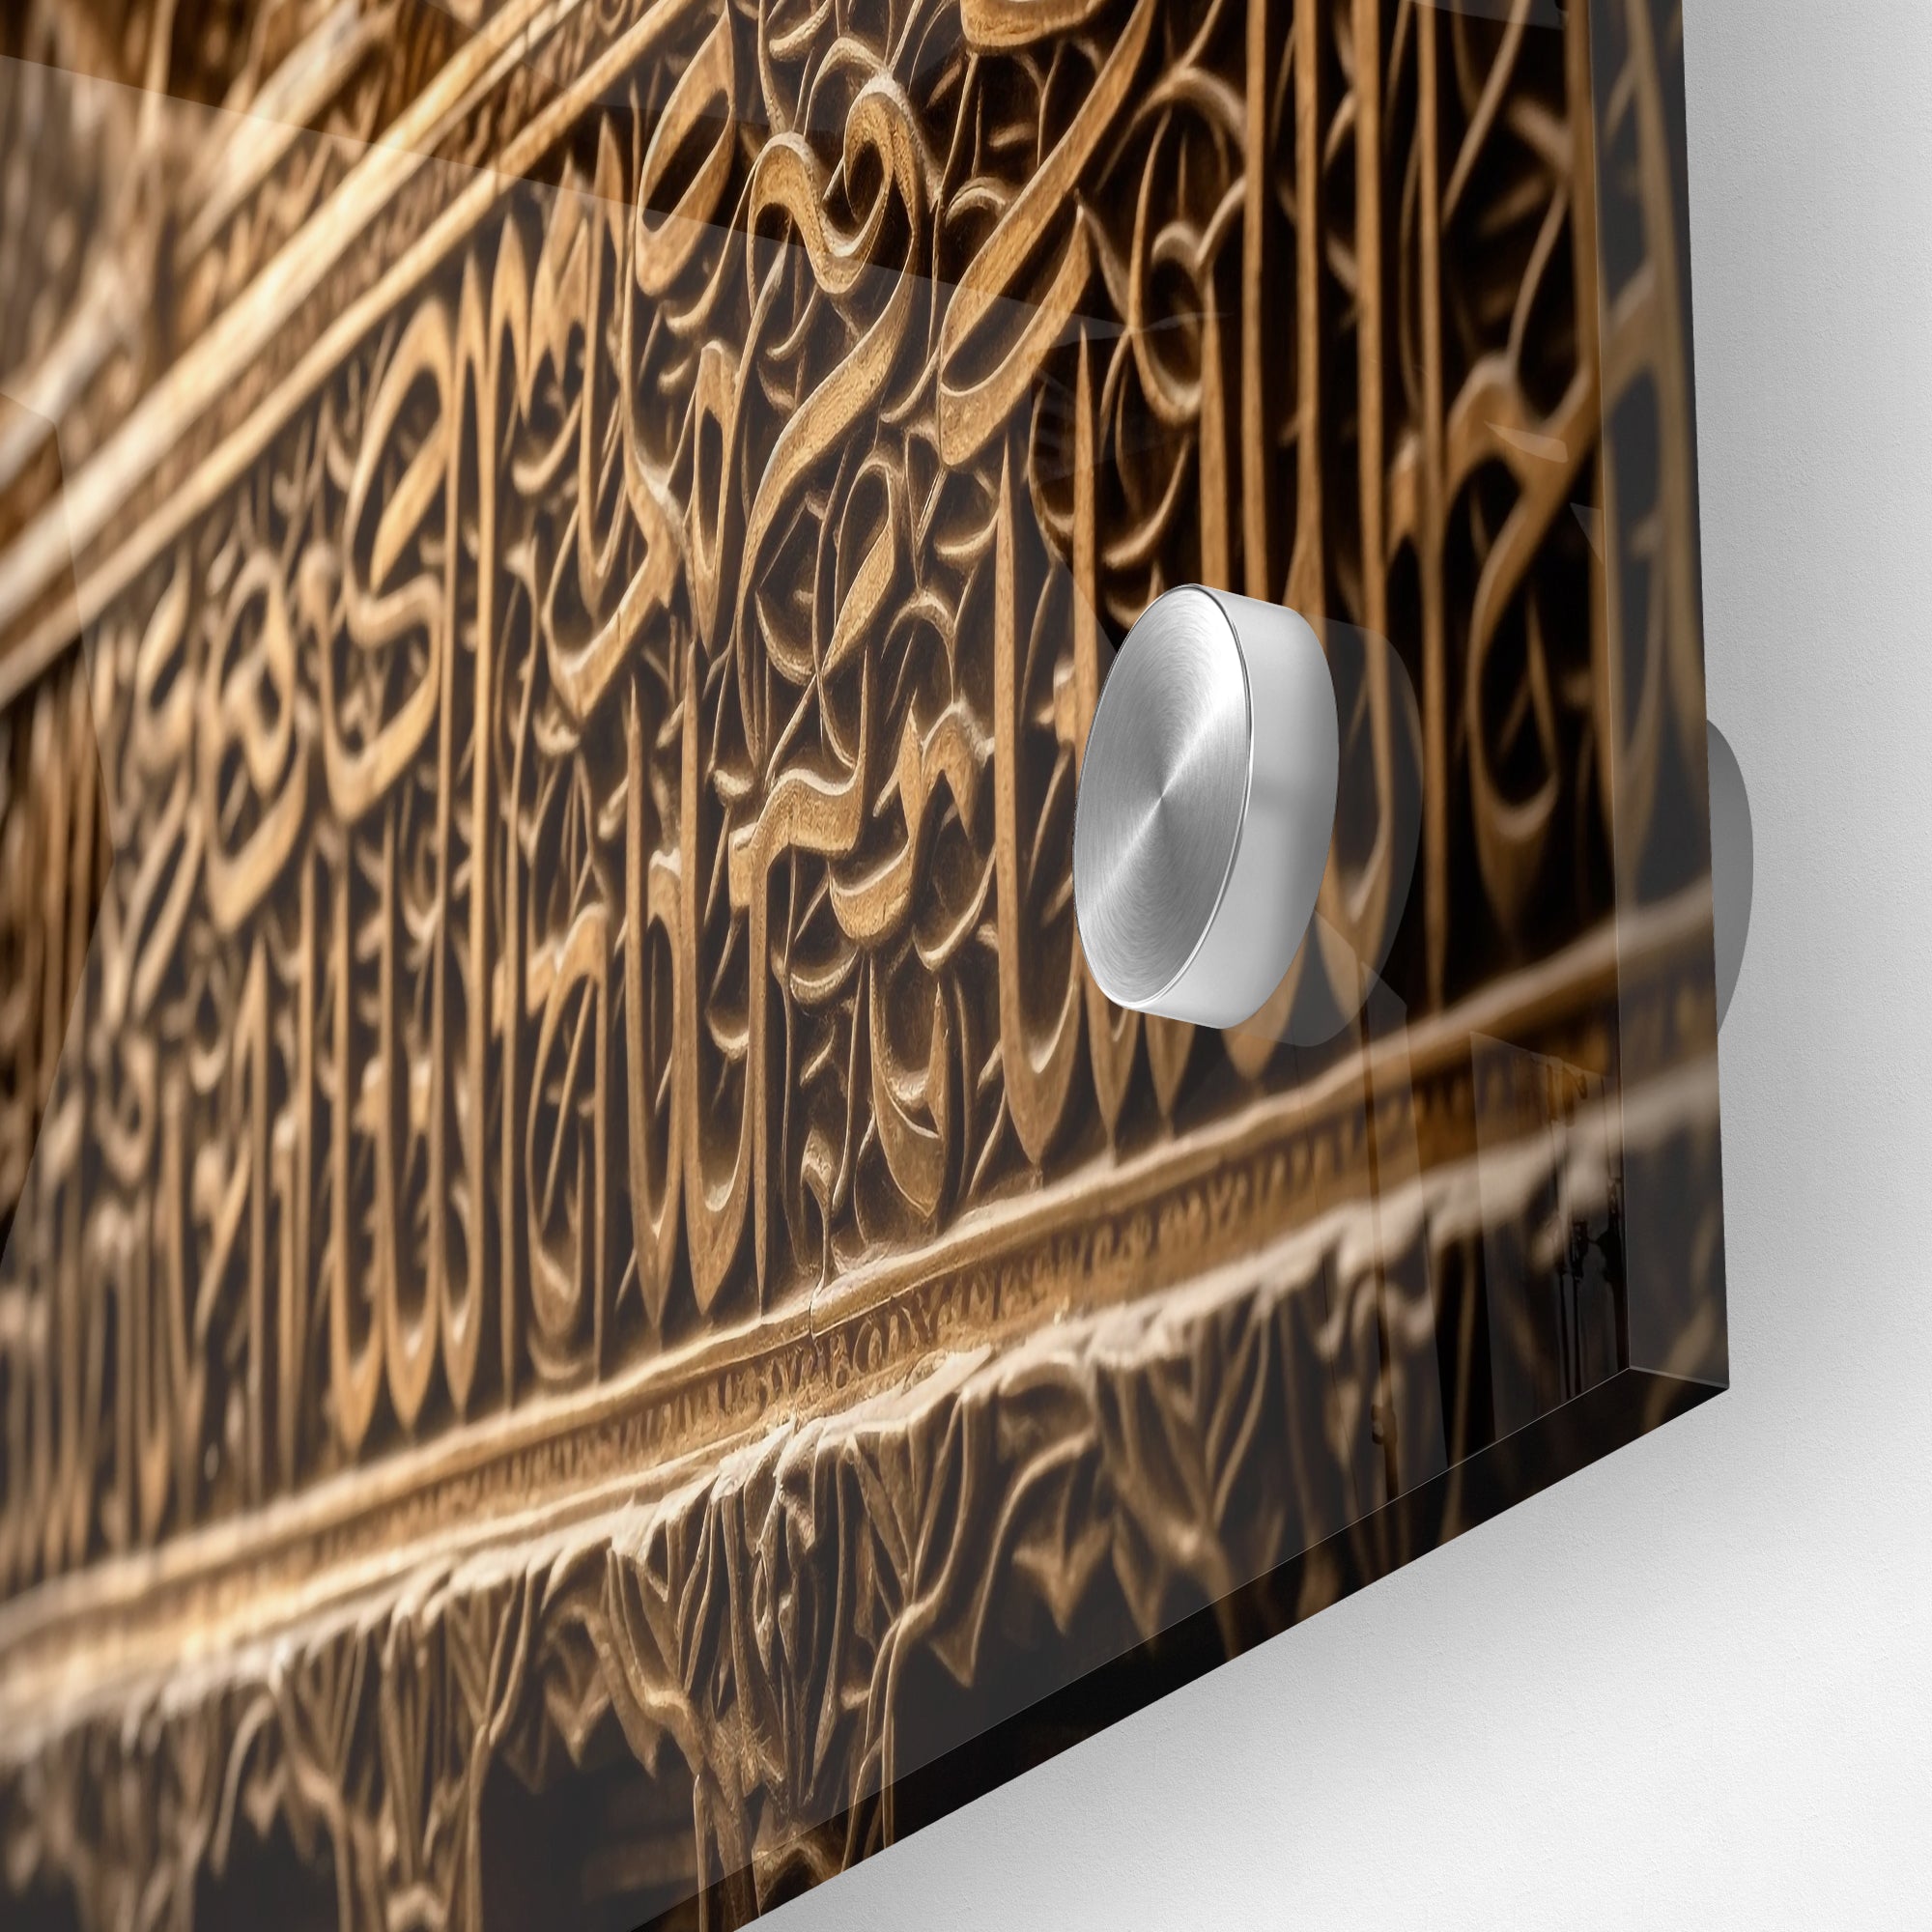 Islamic Art Acrylic Wall Painting